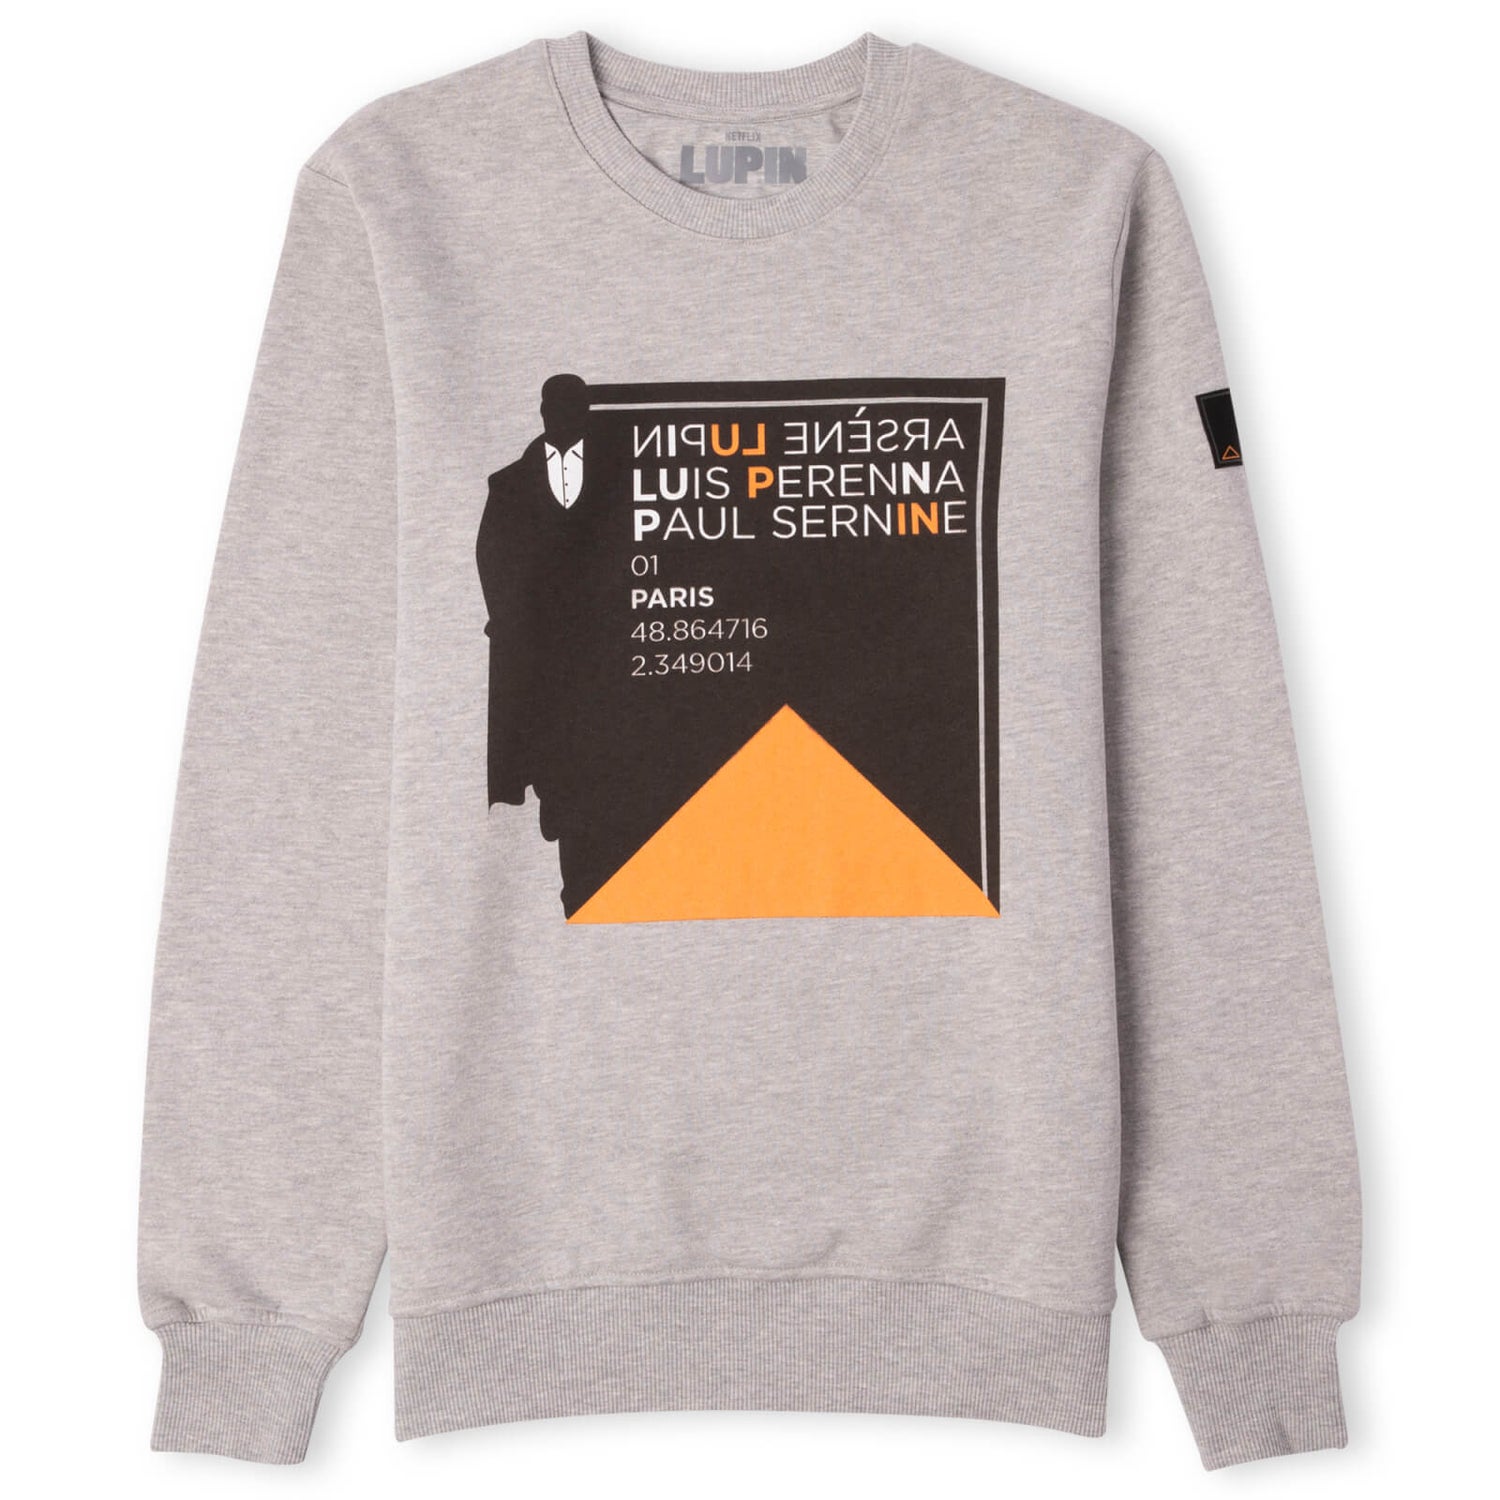 Lupin Silhouette Unisex Sweatshirt - Grey